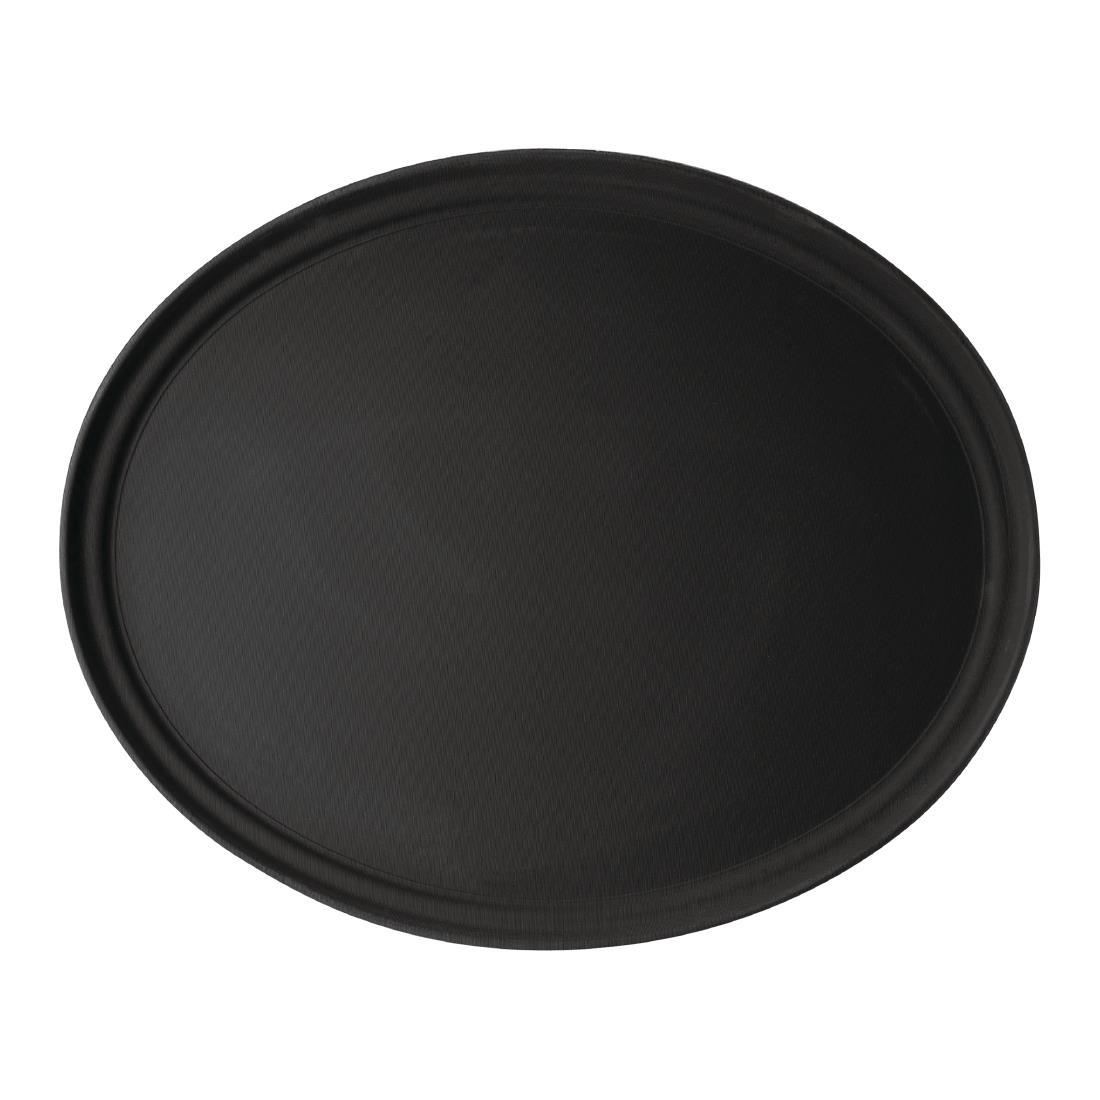 Cambro Camtread Large Fibreglass Oval Non-Slip Tray Black 600mm - DM783  - 1